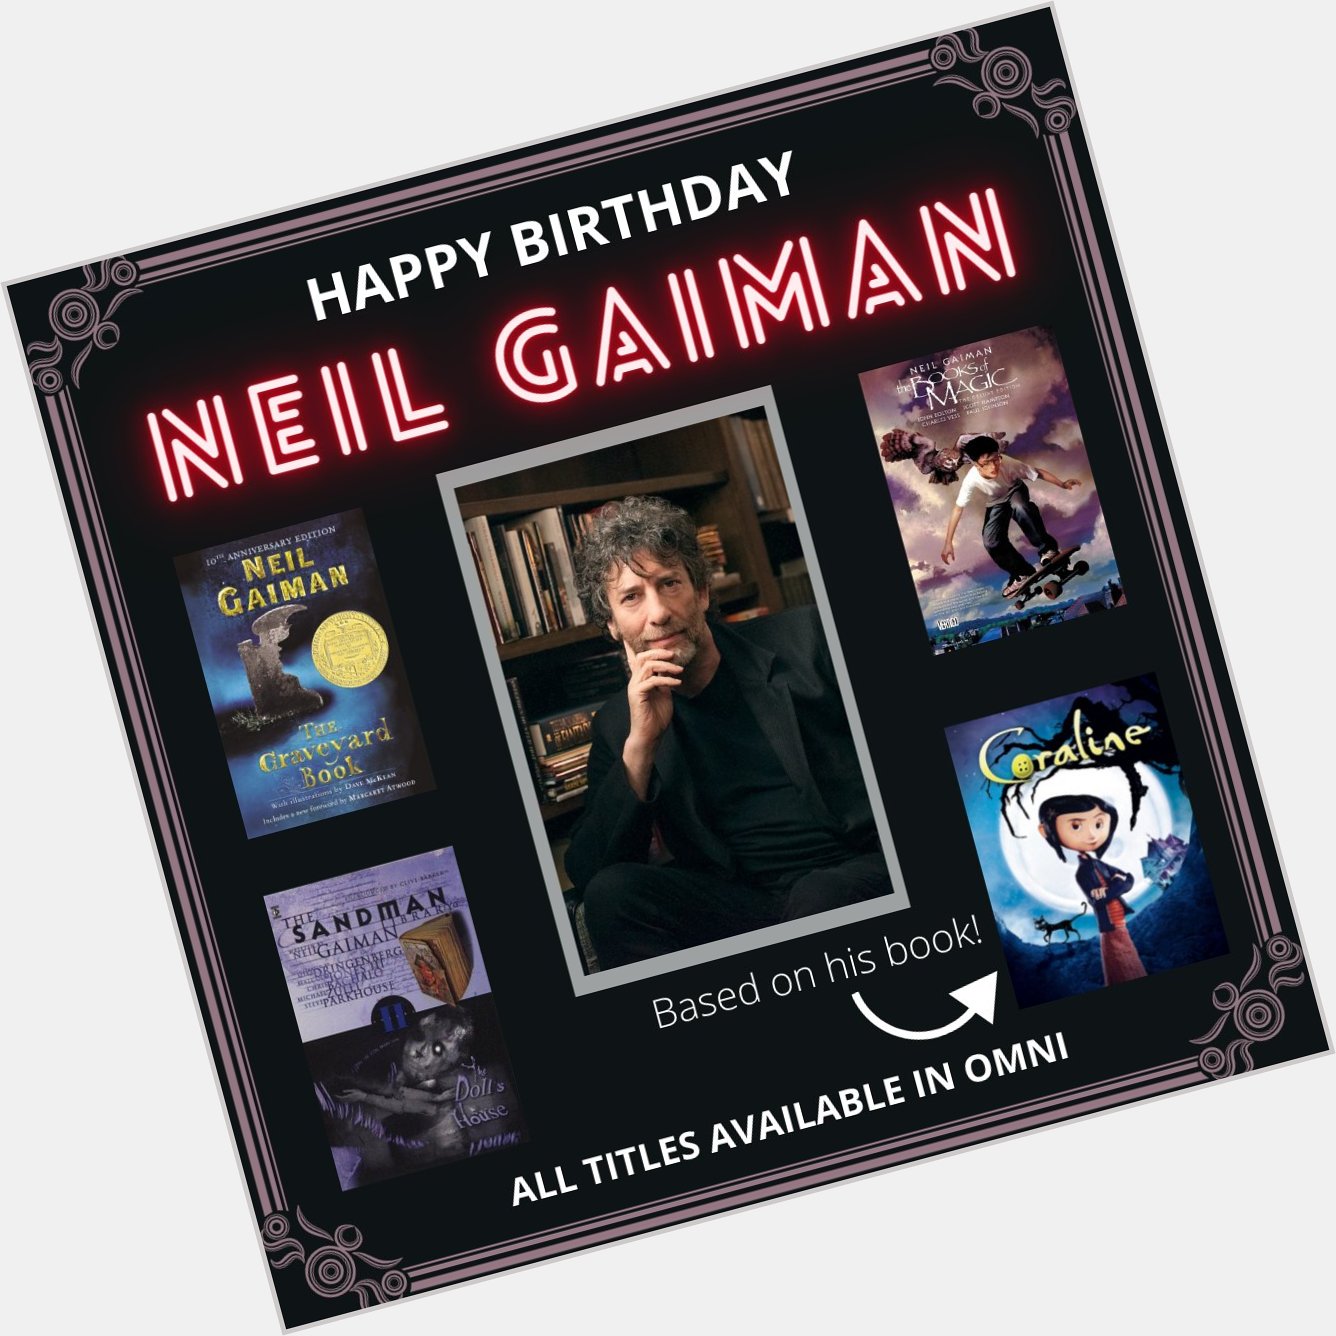 Happy birthday Neil Gaiman! 